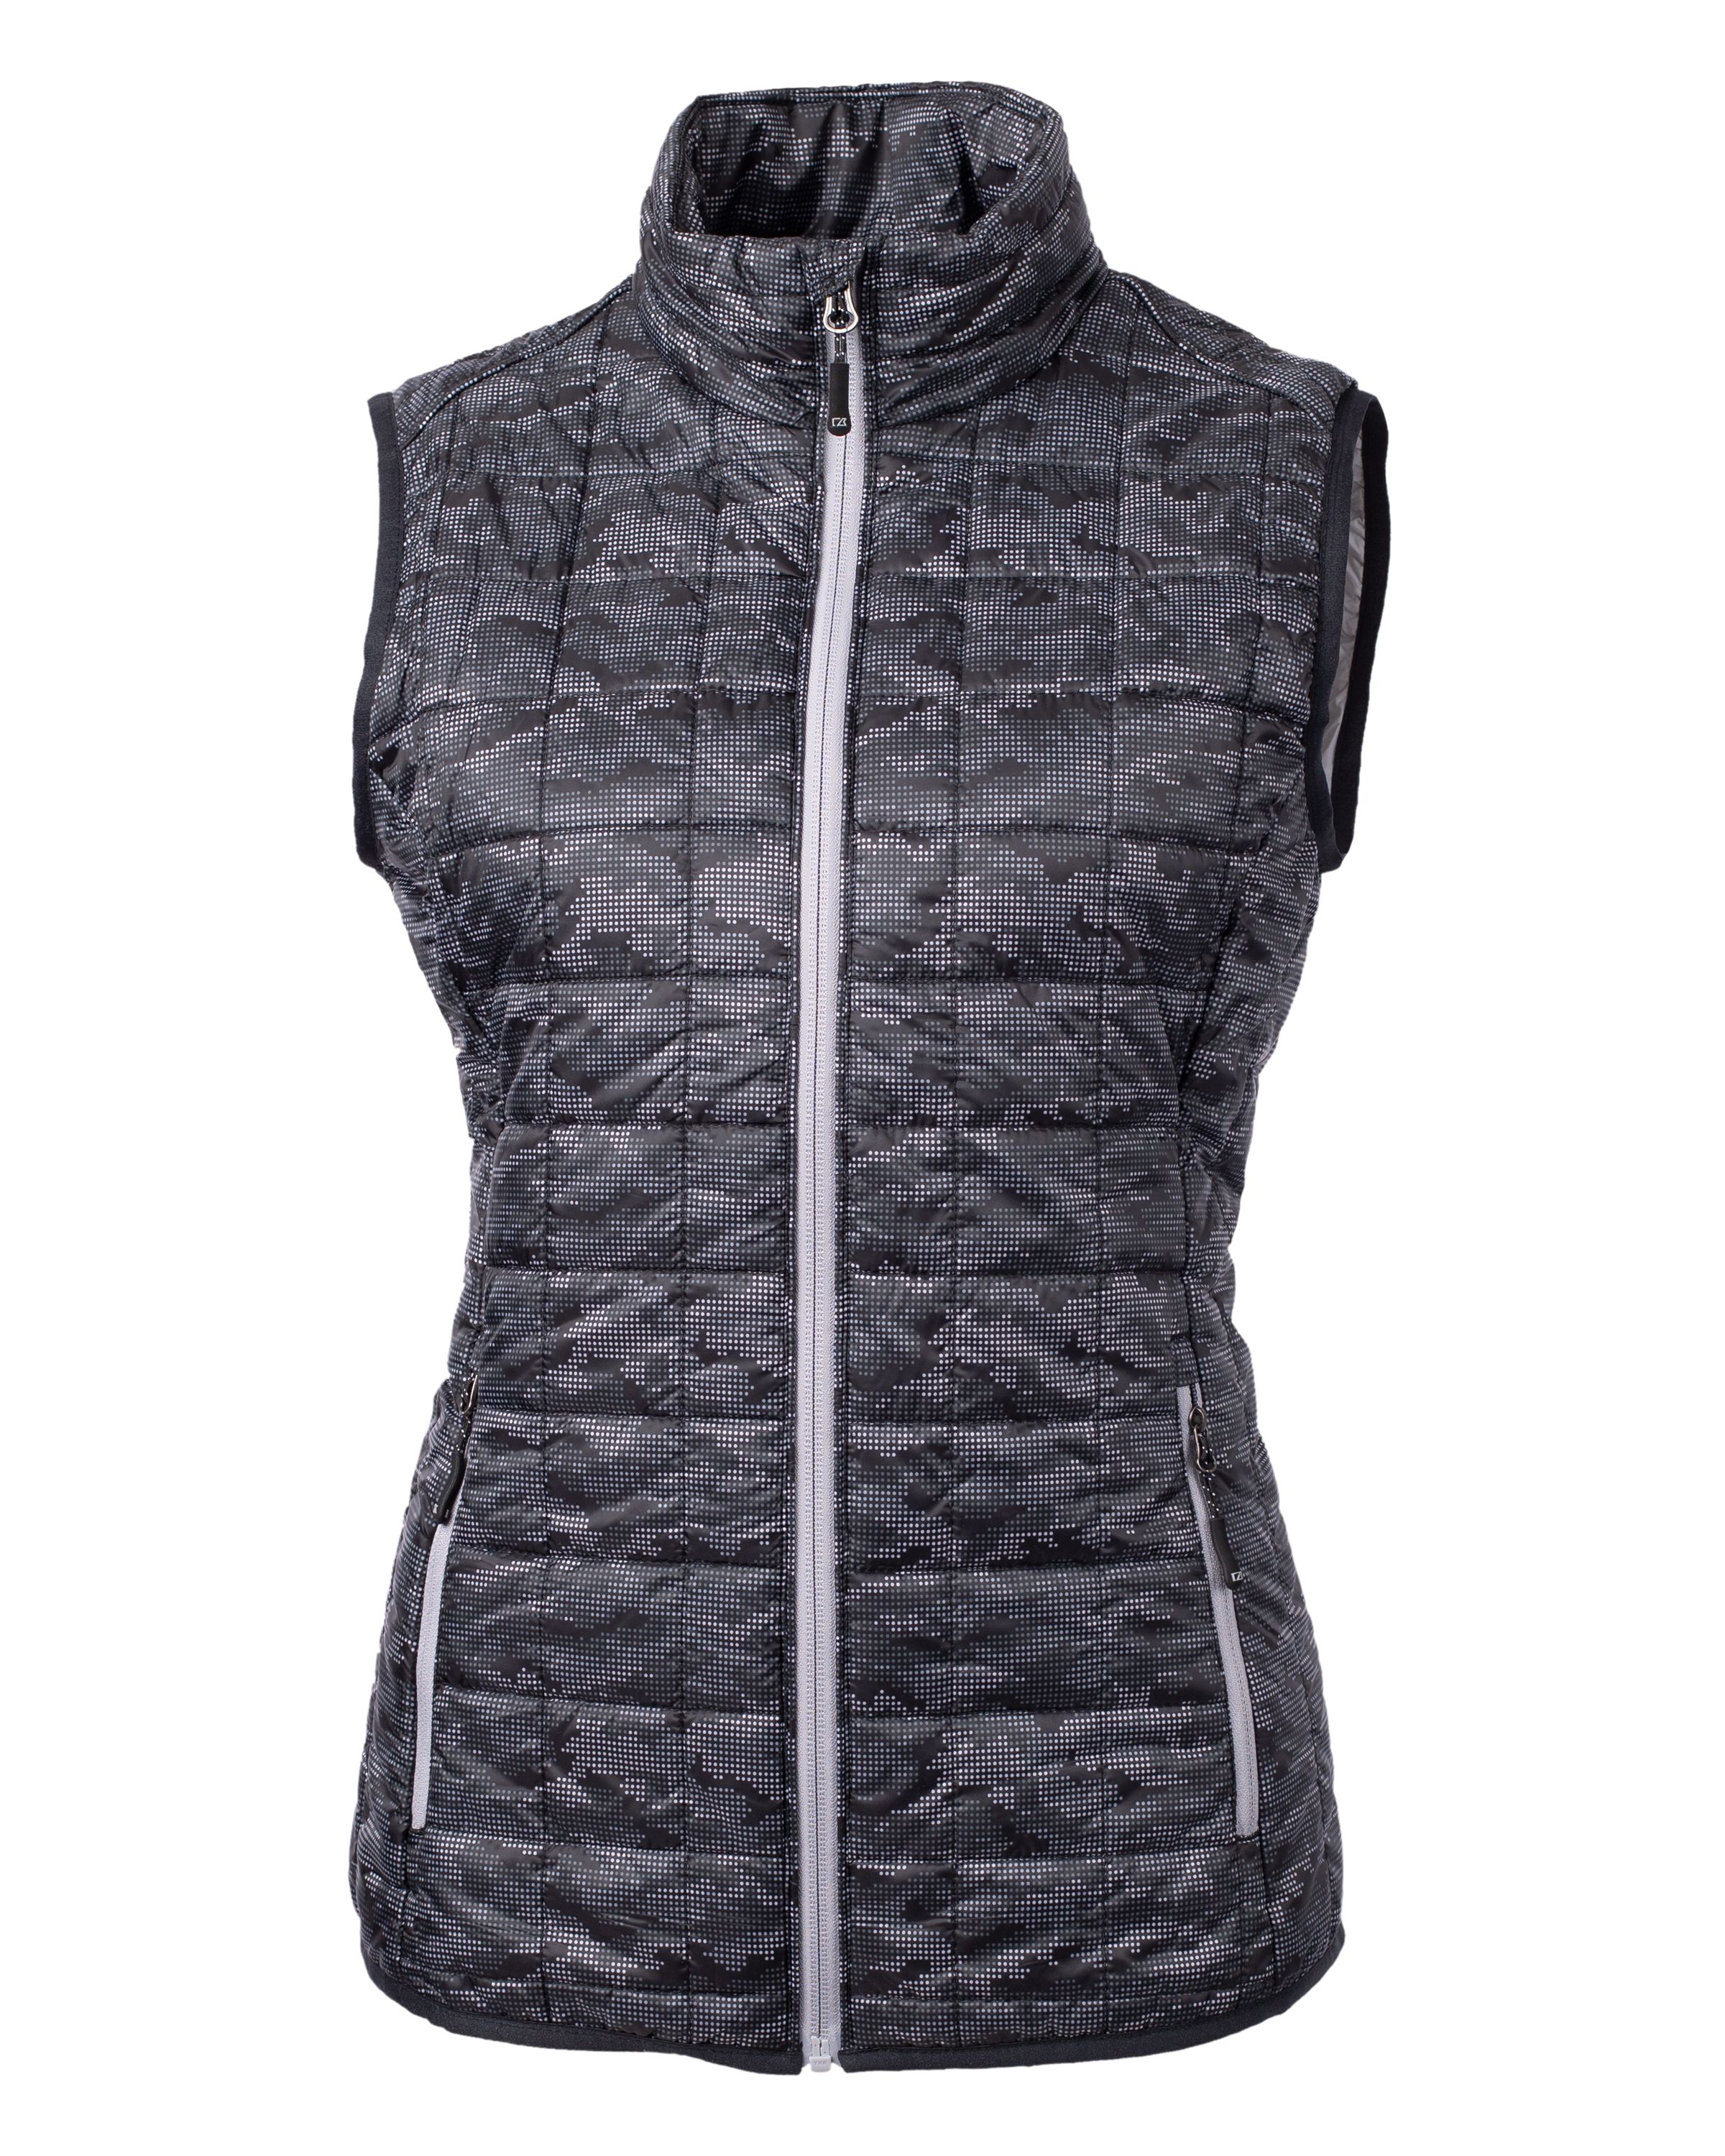 CUTTER & BUCK LCO00054 - Rainier PrimaLoft® Women's Eco Insulated Full Zip Printed Puffer Vest